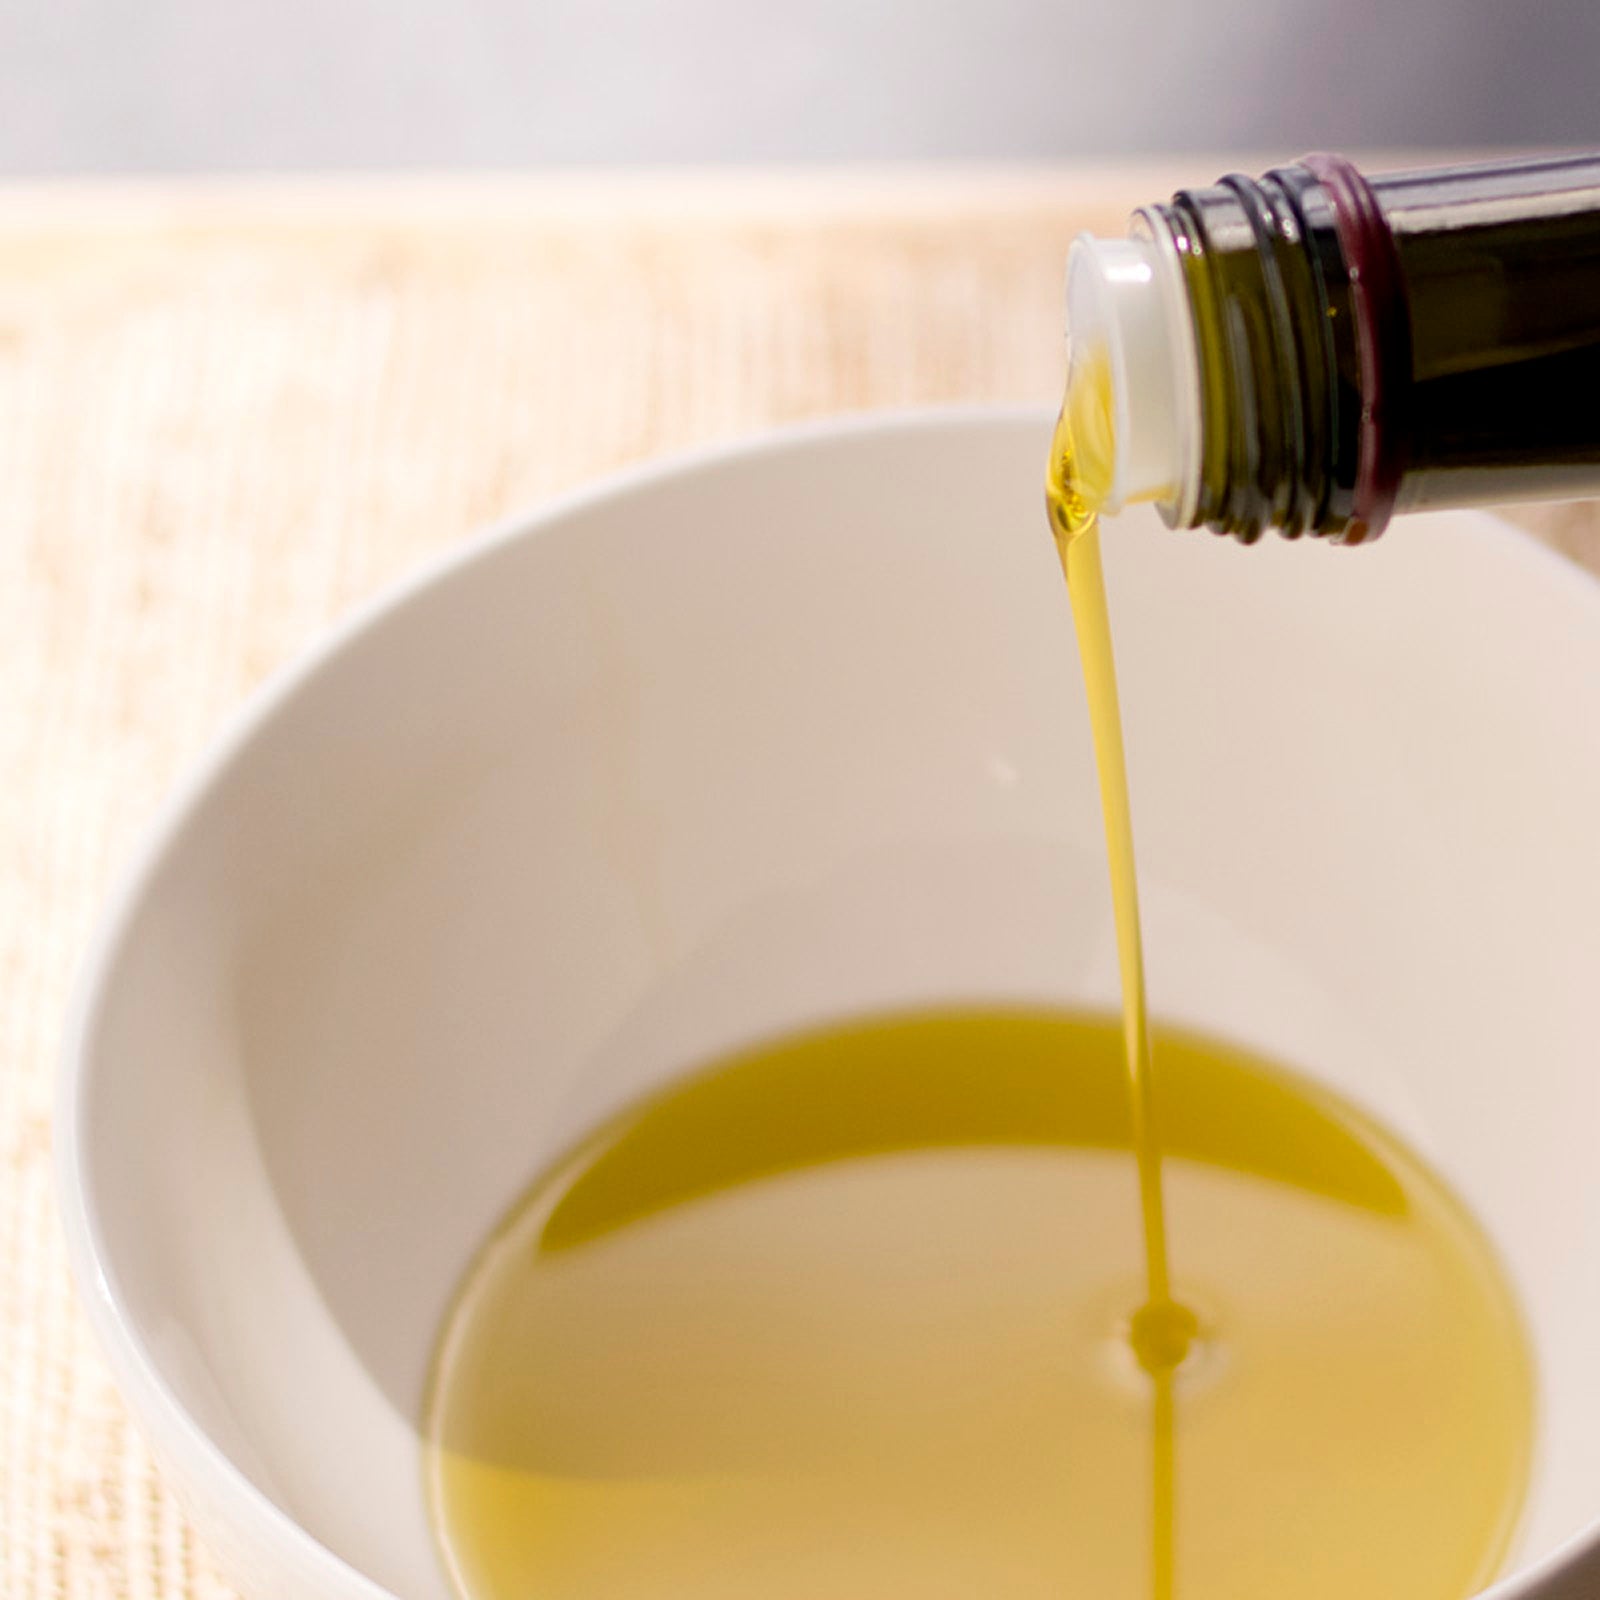 Extra Virgin Olive Oil - Spanish Olive Oil